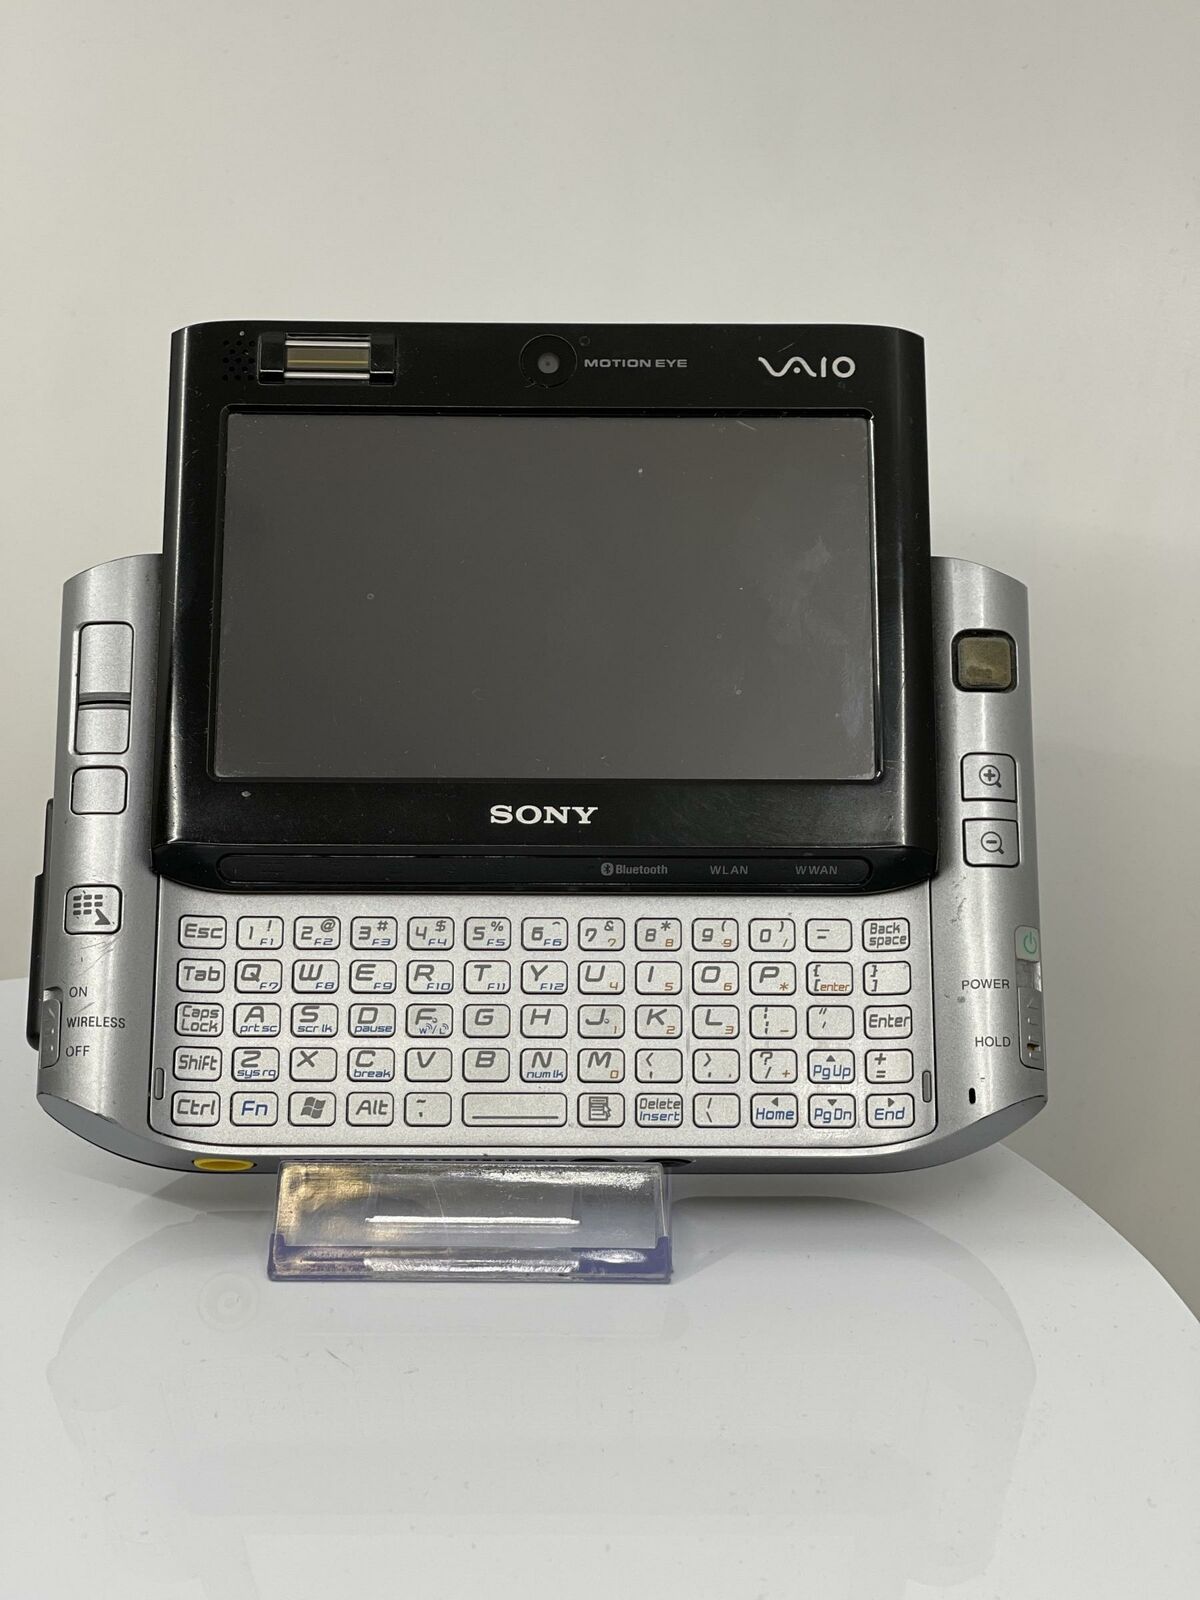 Sony VAIO 4.5-inch Micro Laptop 1GB RAM 40 GB HD (VGN-UX280P)